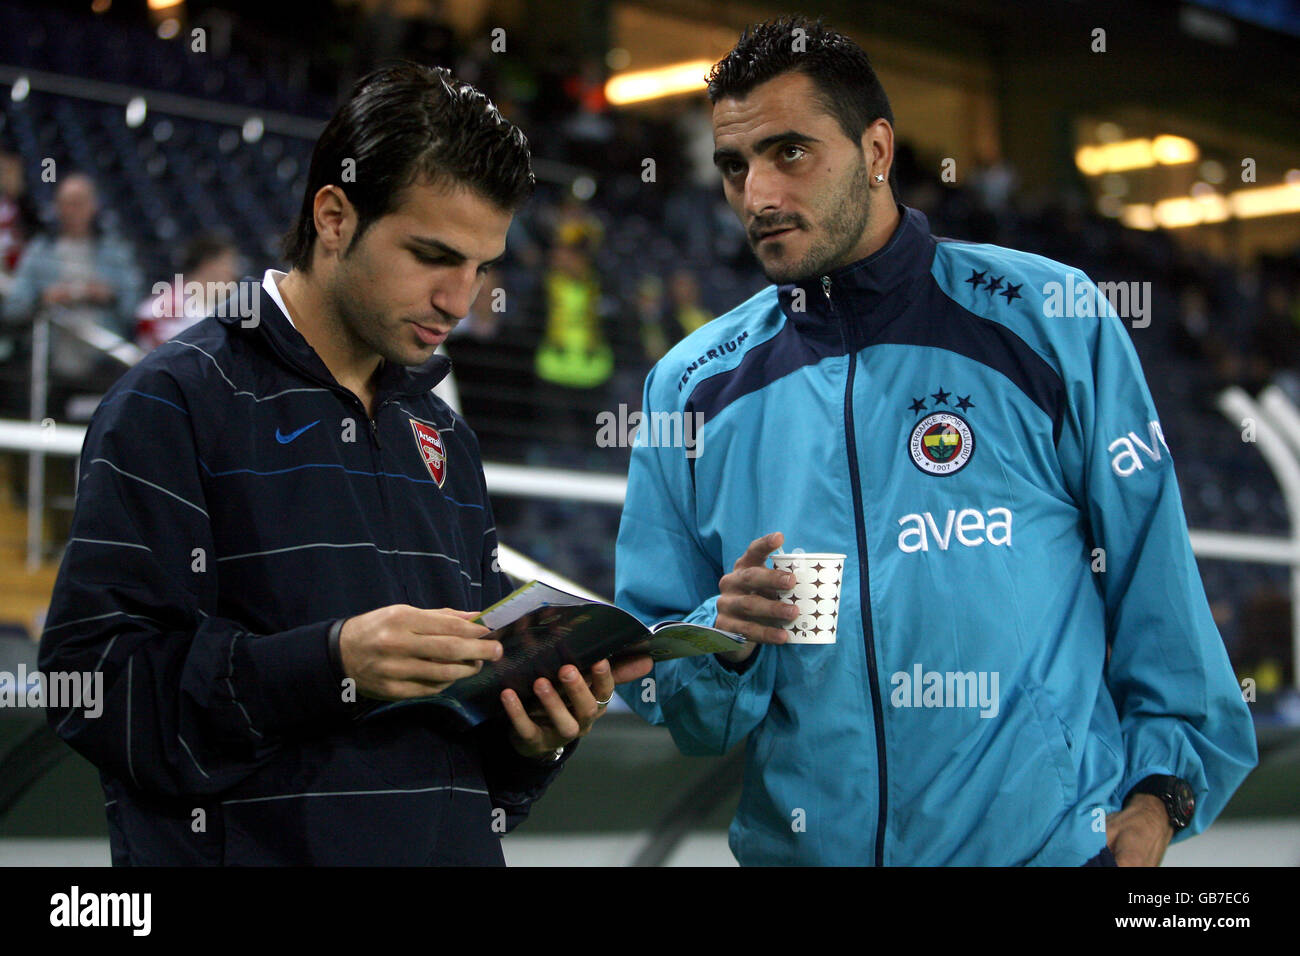 Fenerbahce's Daniel Guiza and Arsenal's Francesc Fabregas talk before the game Stock Photo